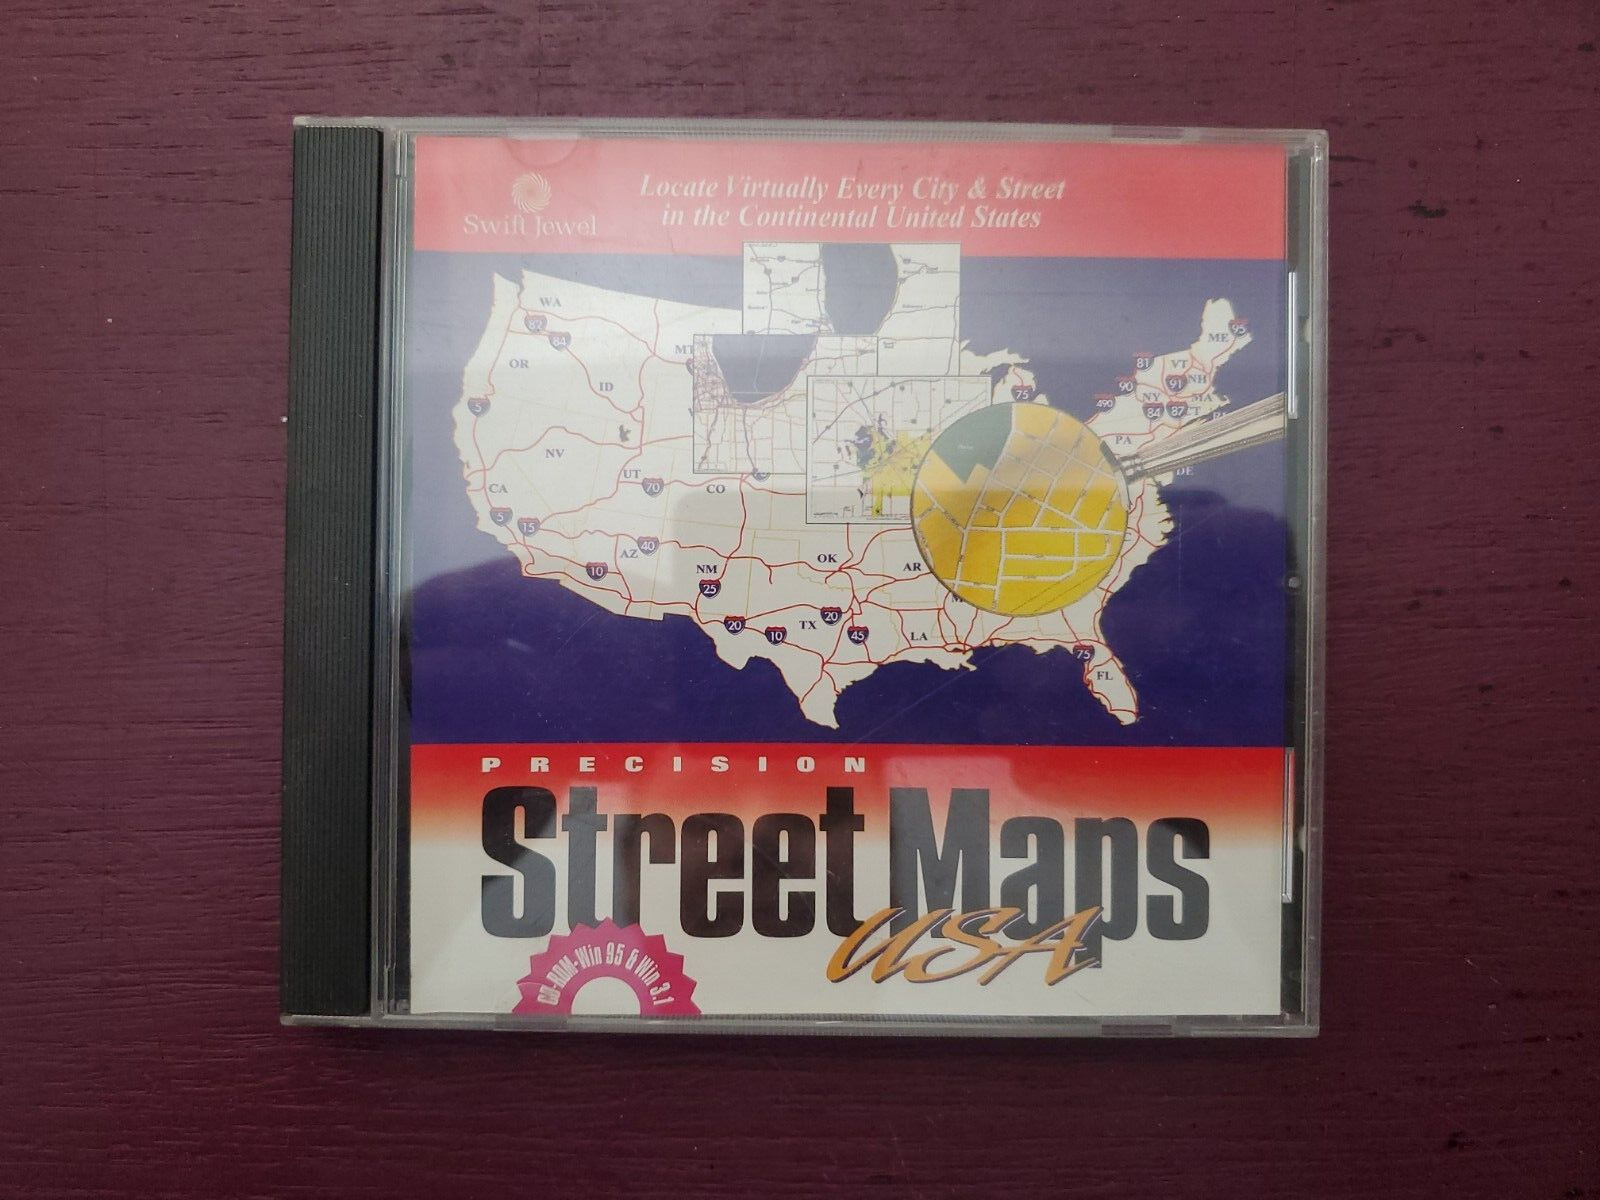 Swift Jewel - Precision Street Maps USA (PC CD ROM, 1997) Windows 95 & 3.1